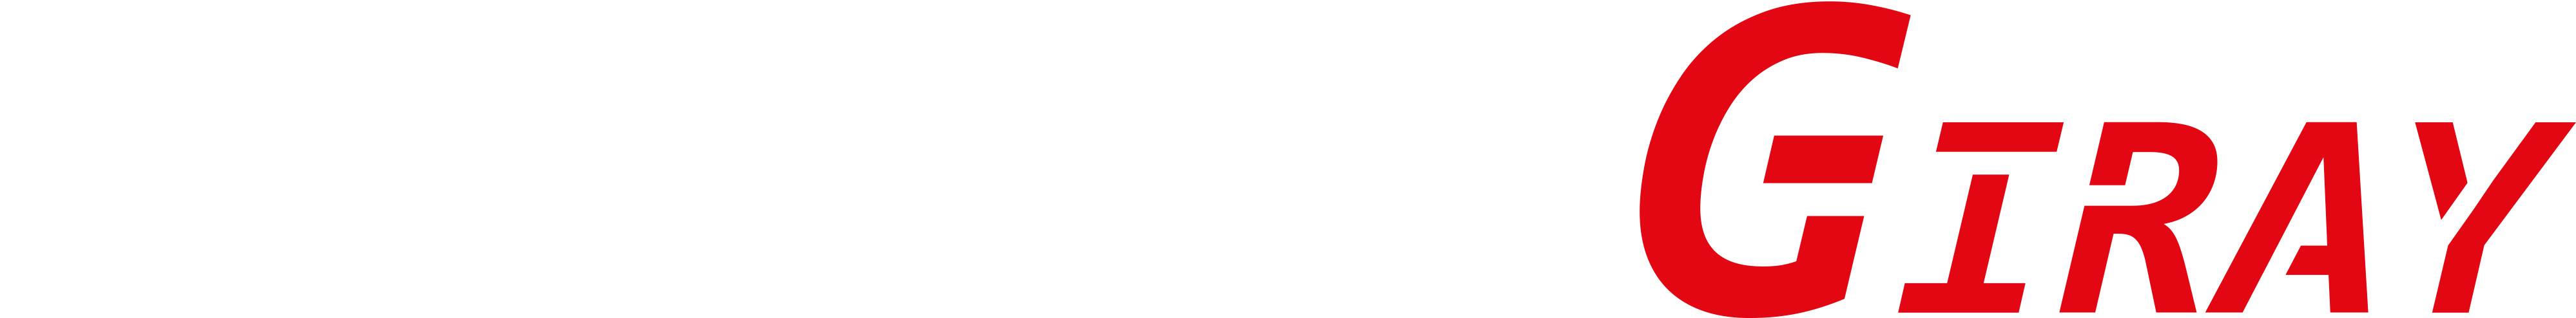 Garage Giray Logo weiss